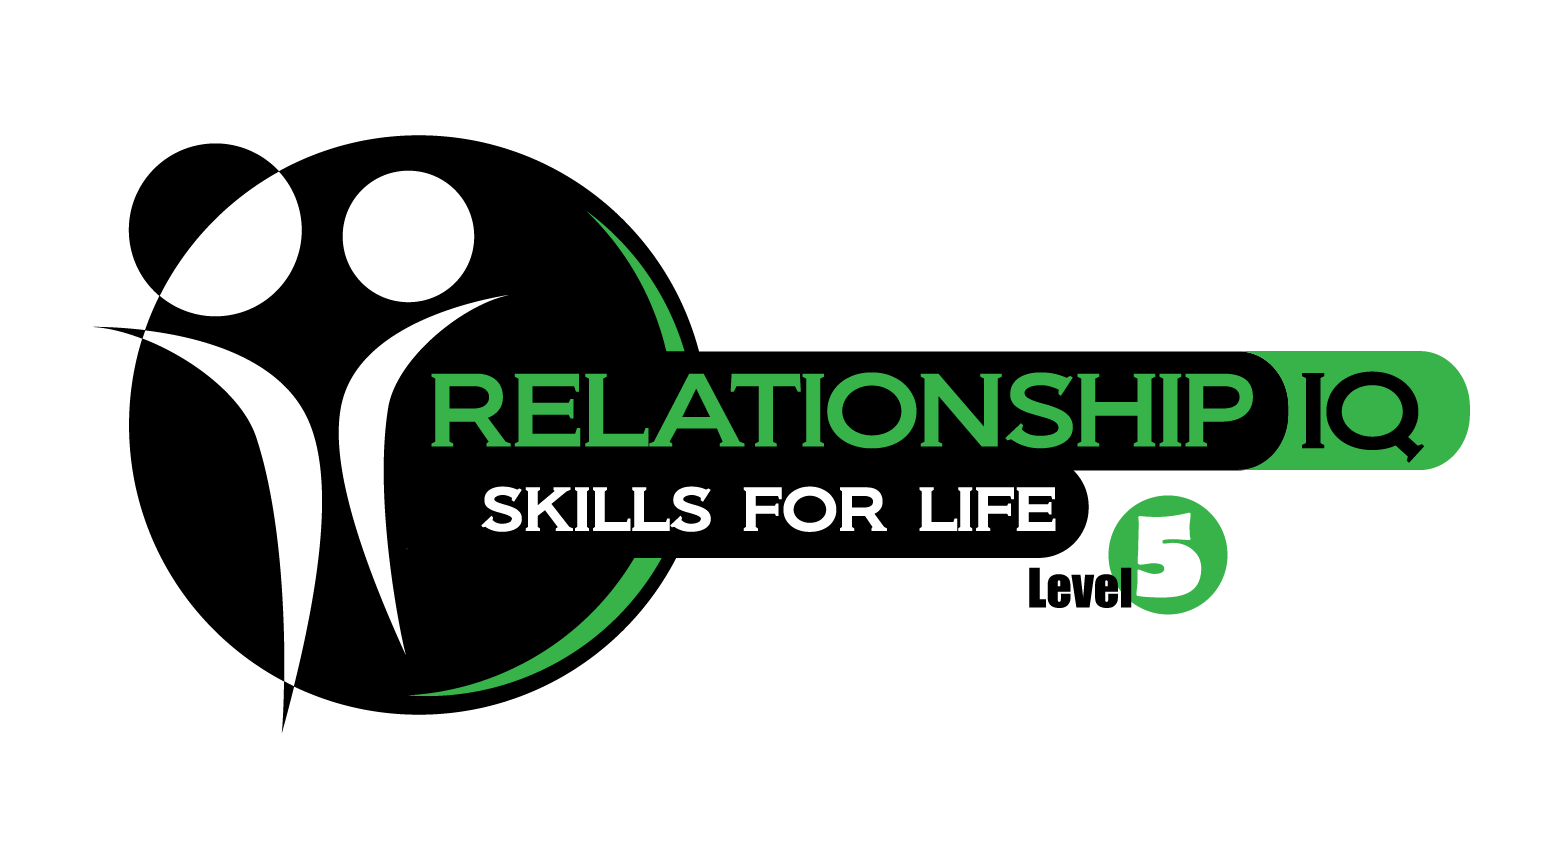 RELATIONSHIP IQ Level 4 logo5